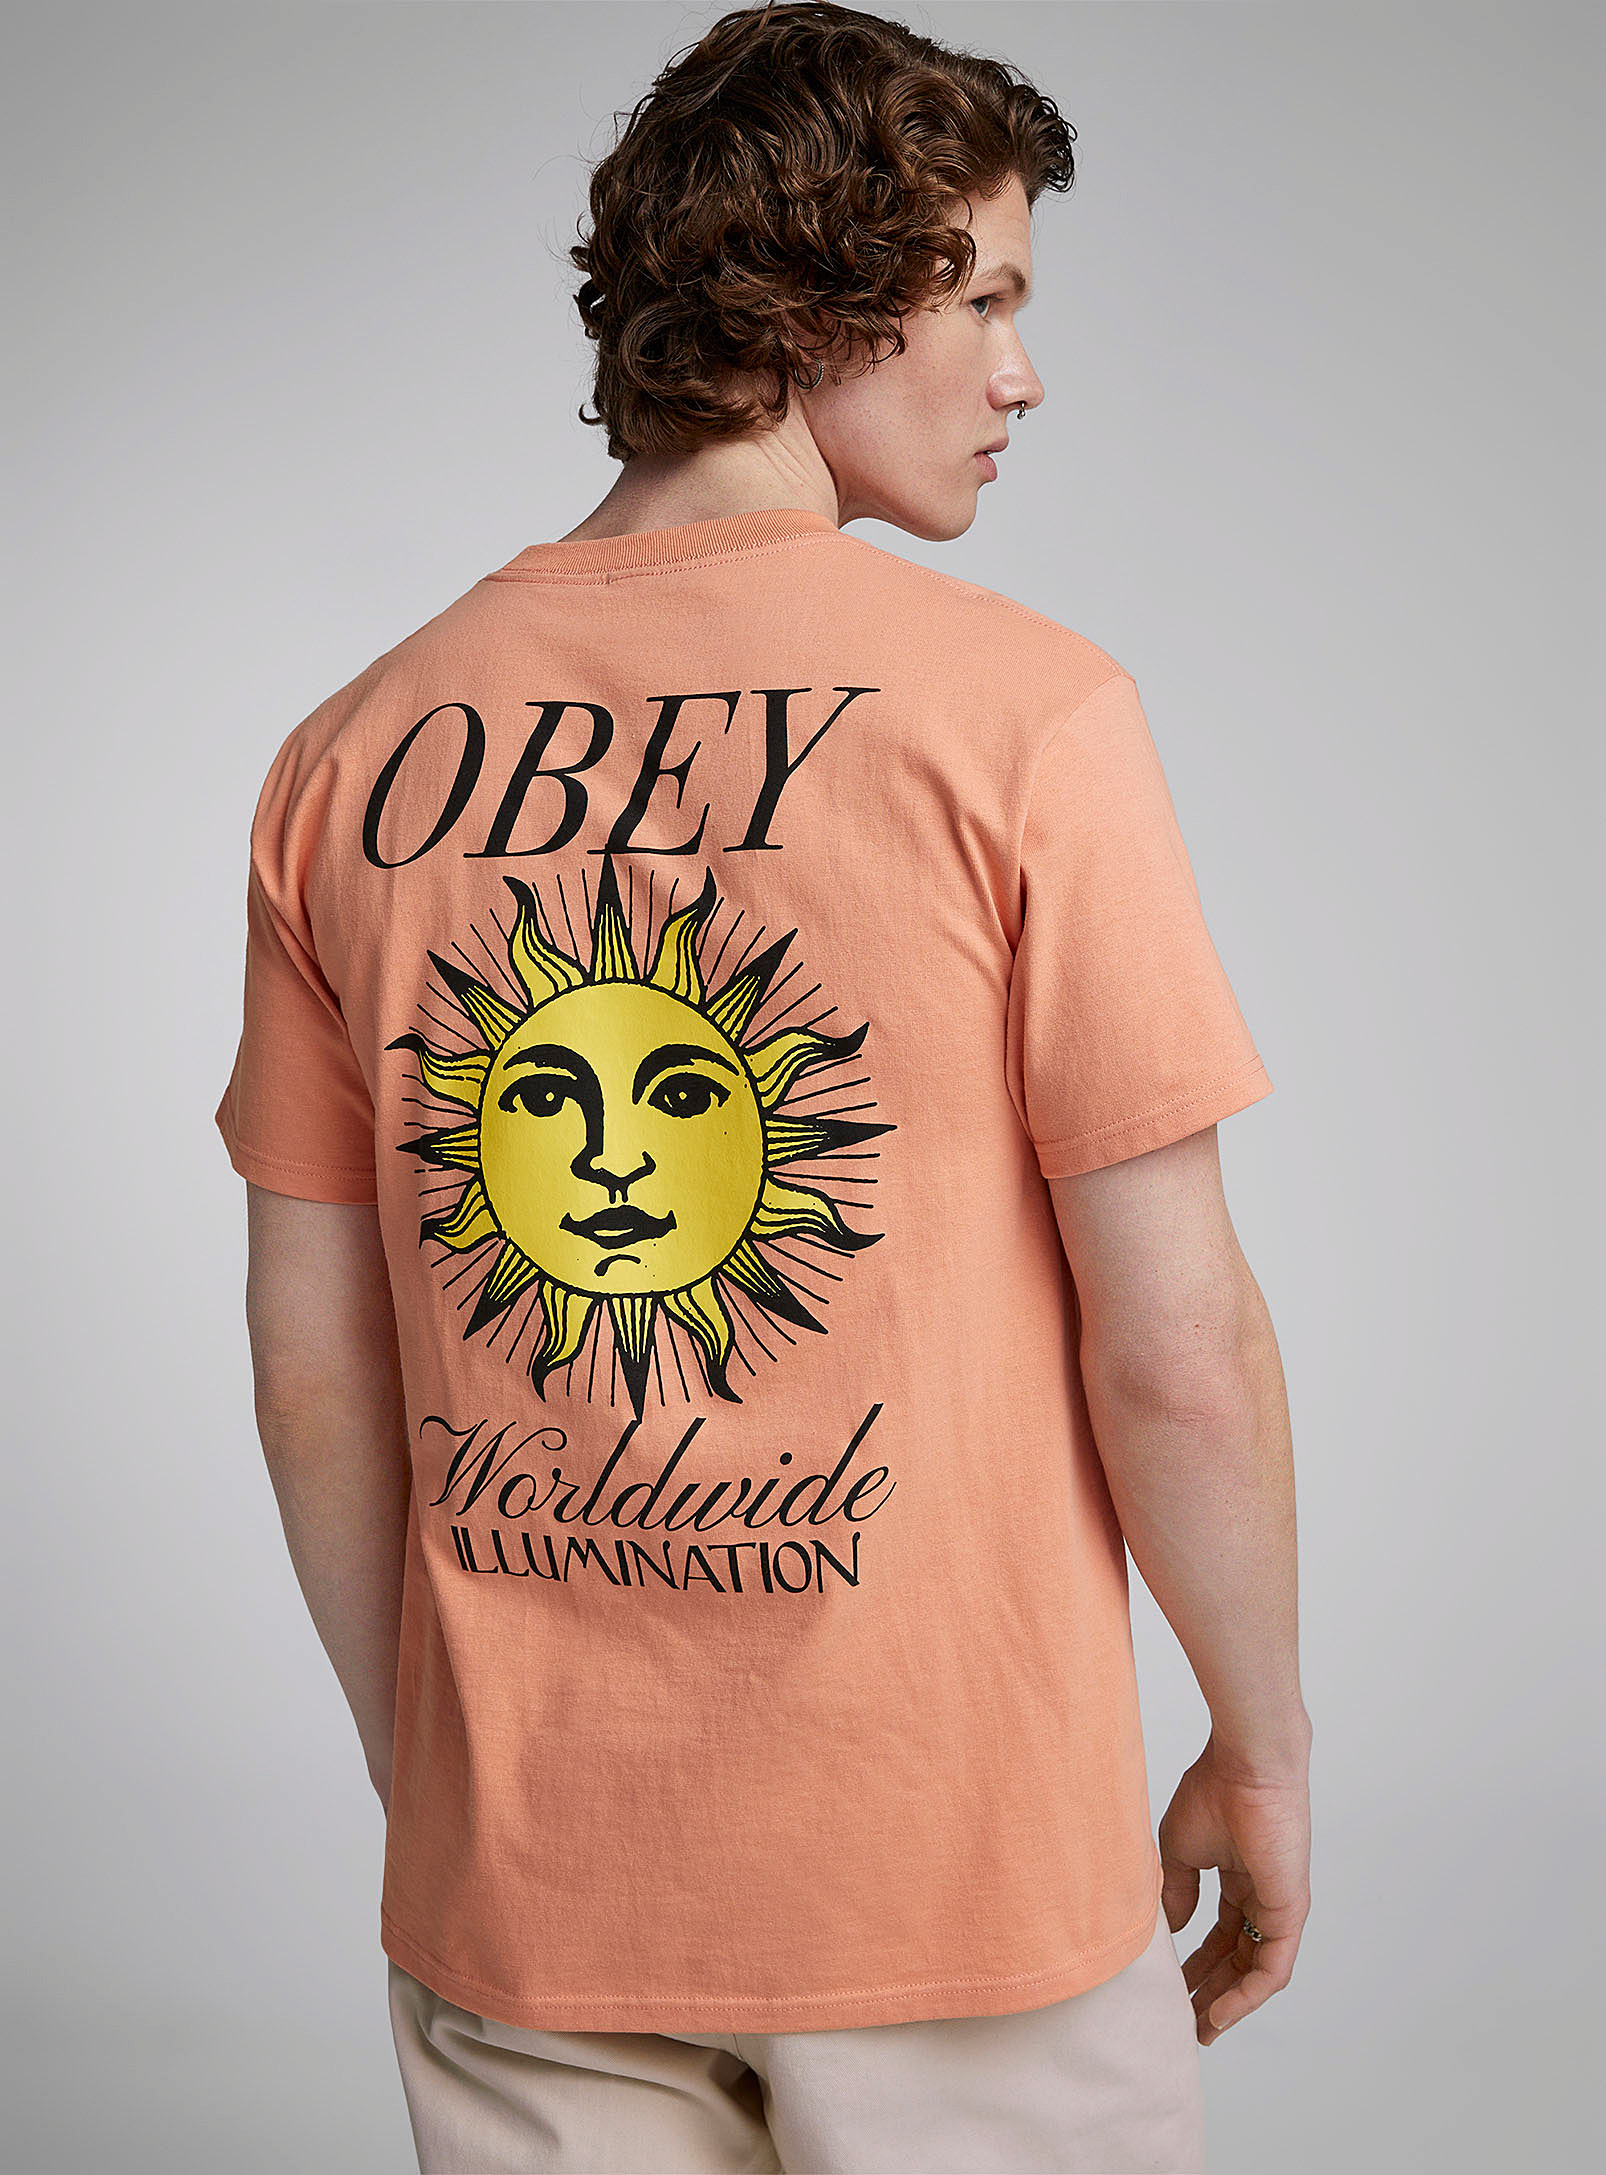 Obey - Men's Illumination T-shirt